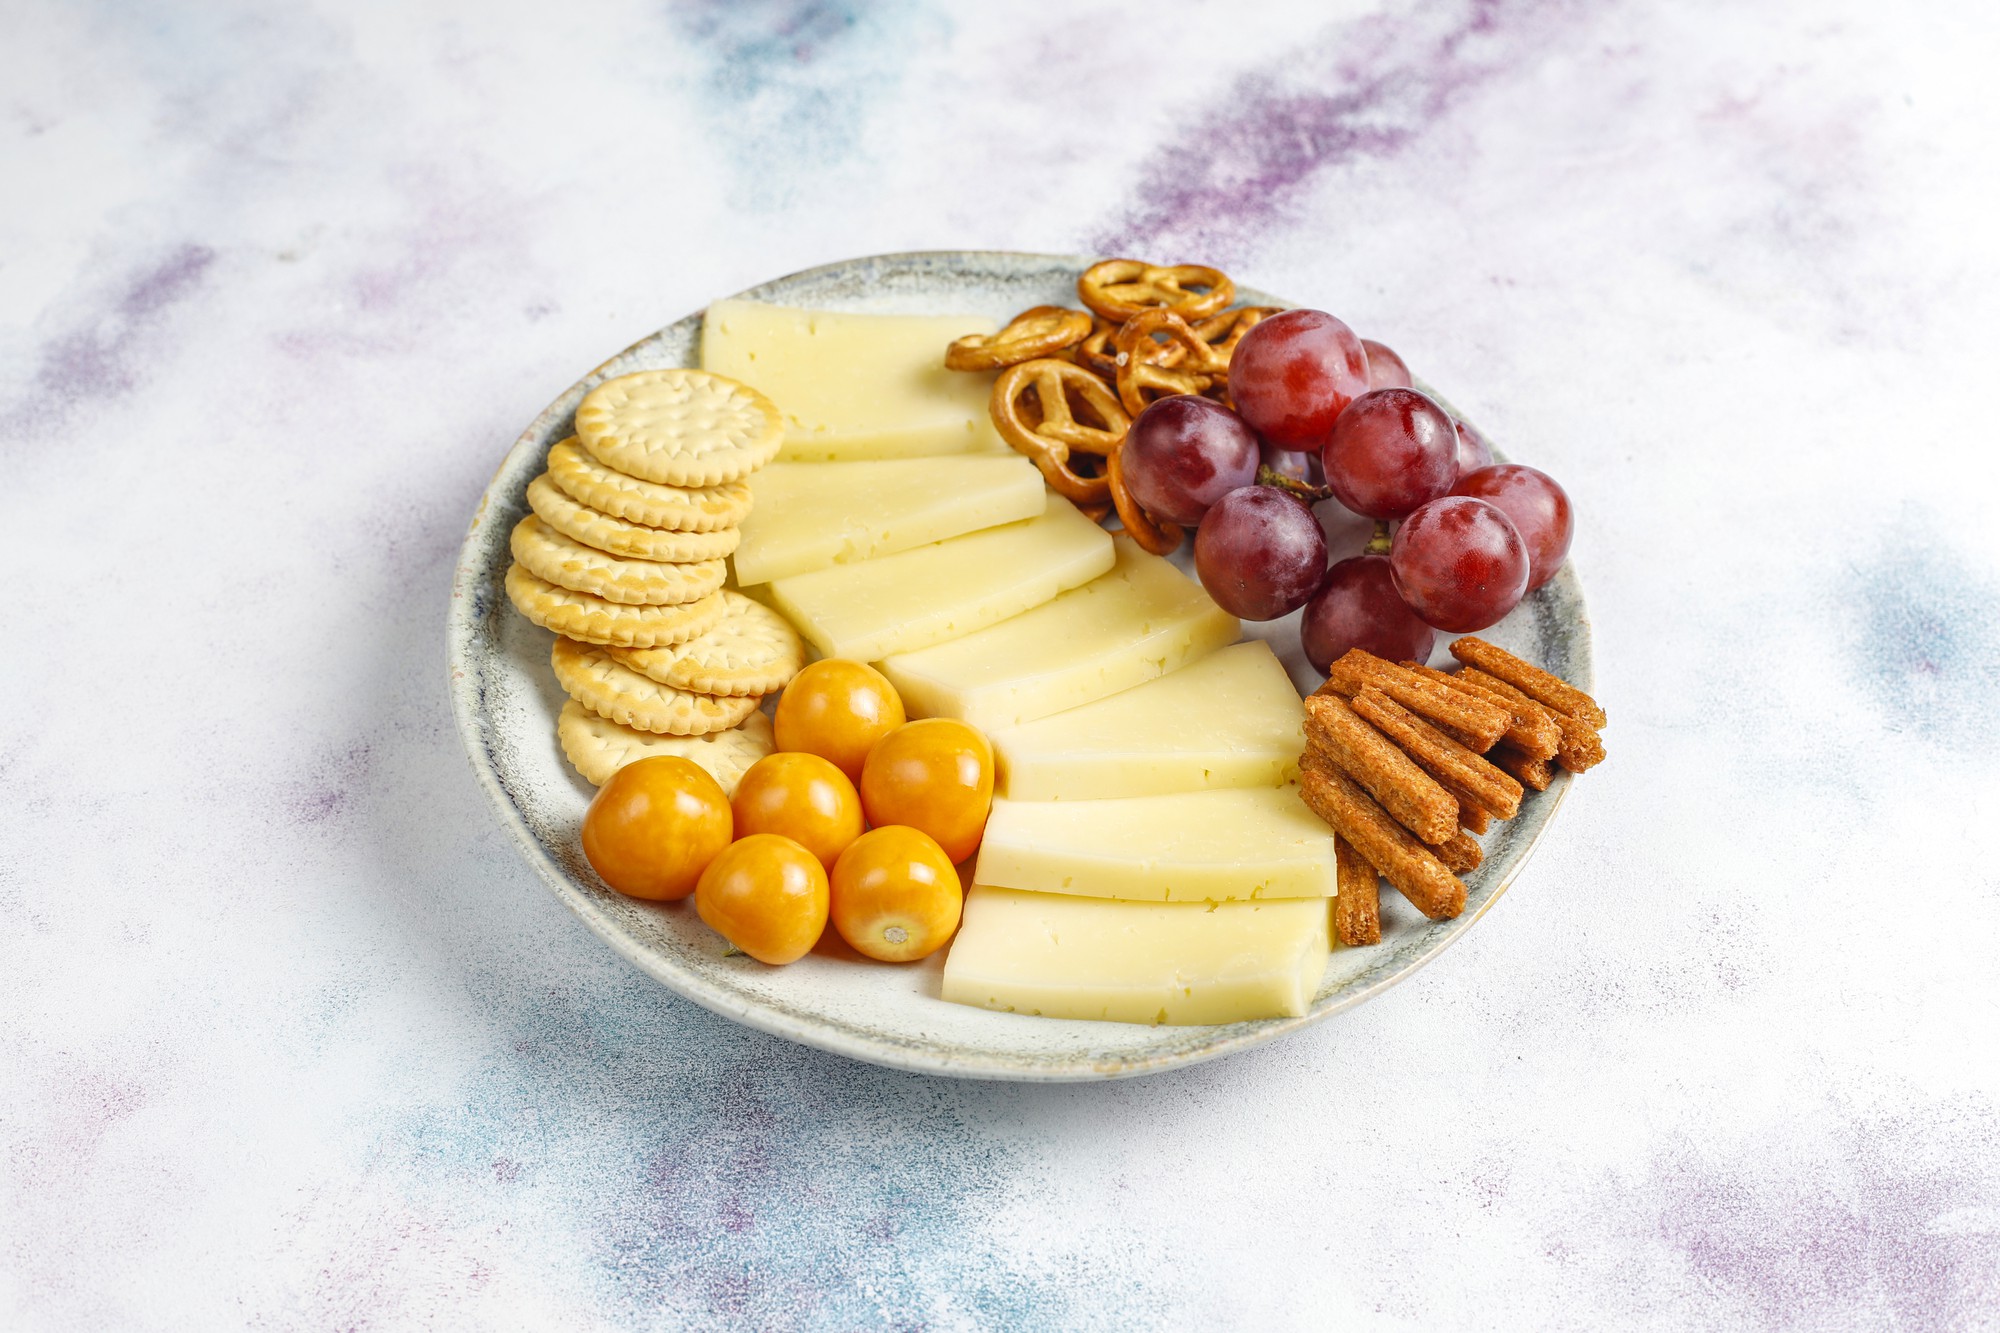 Prato de queijo com delicioso queijo tilsiter e petiscos.